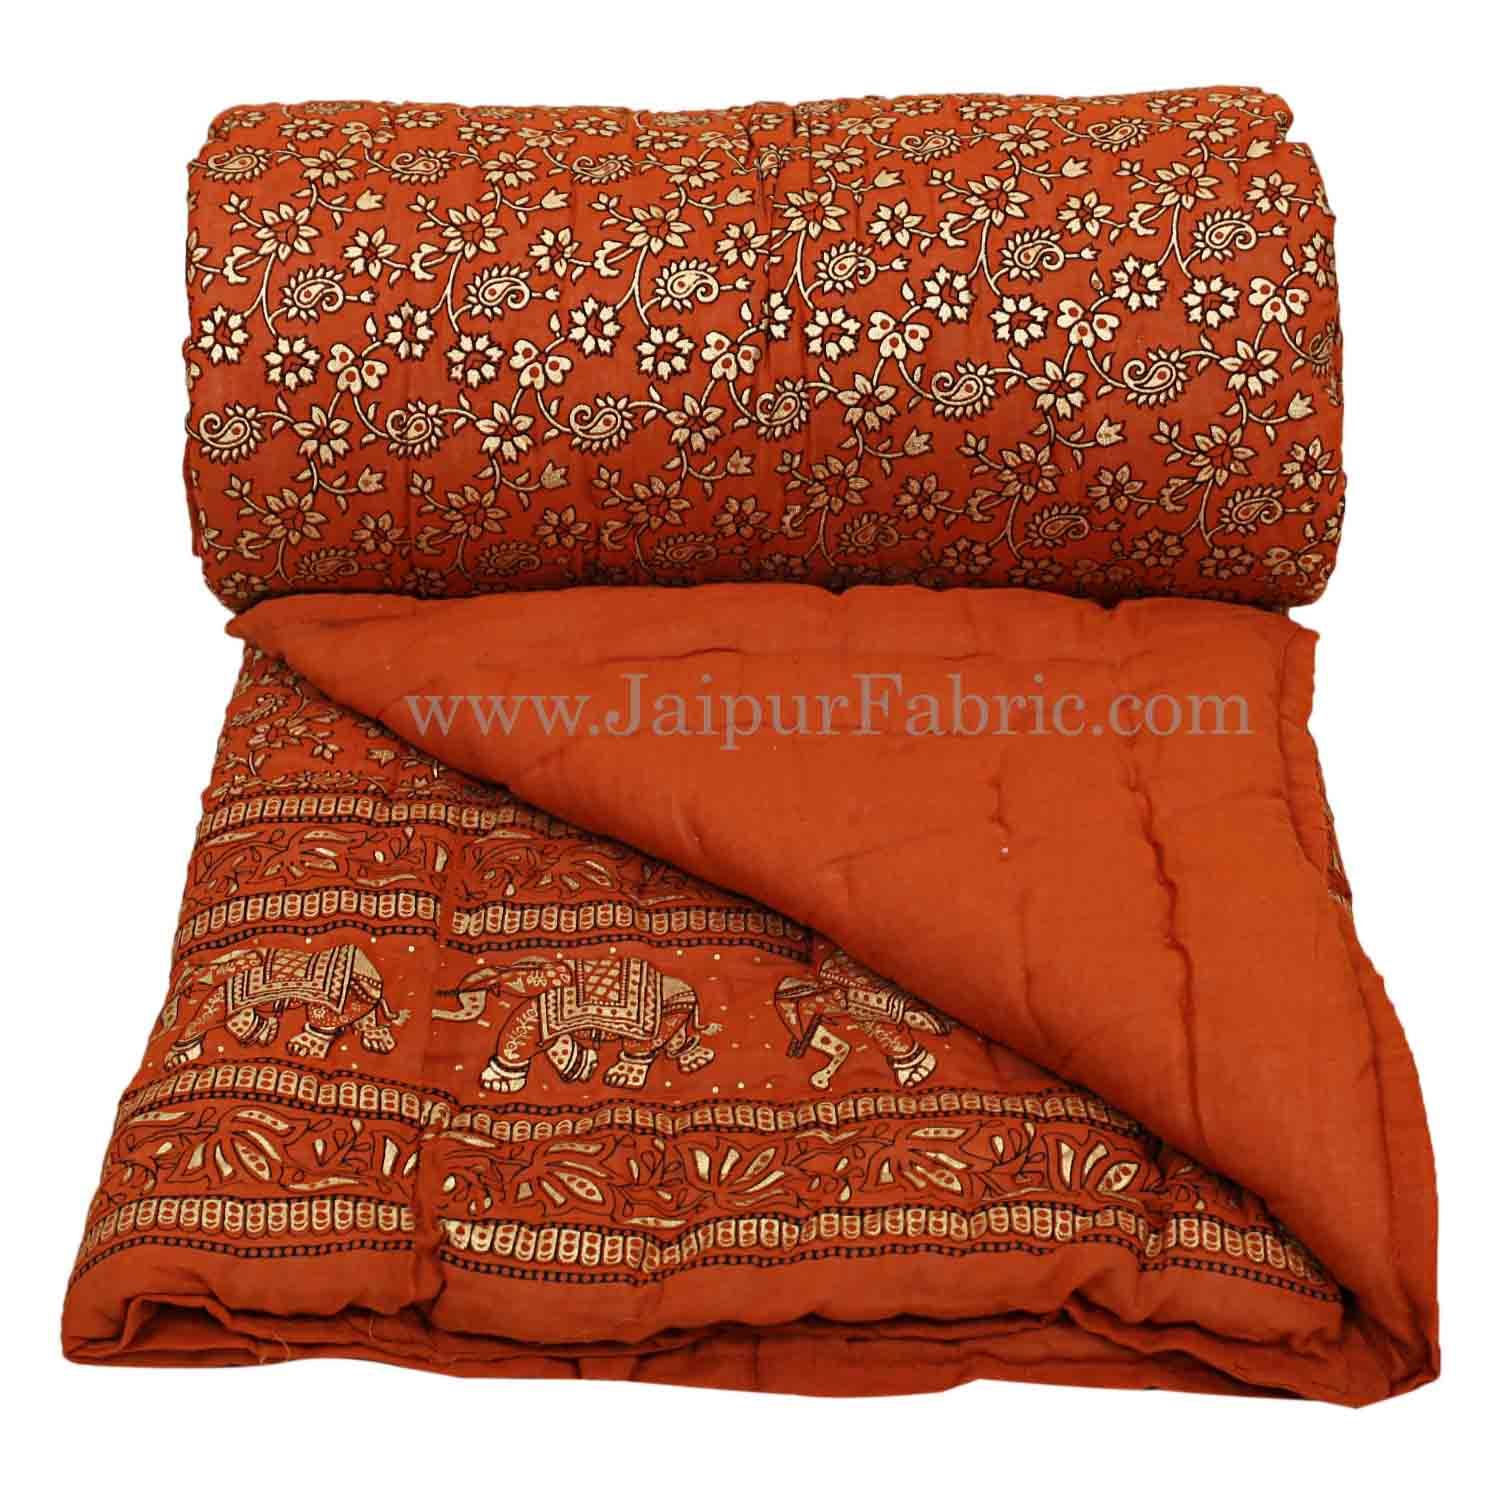 Jaipuri Razai Brick Color Elephant Golden Print Single Bed Quilt